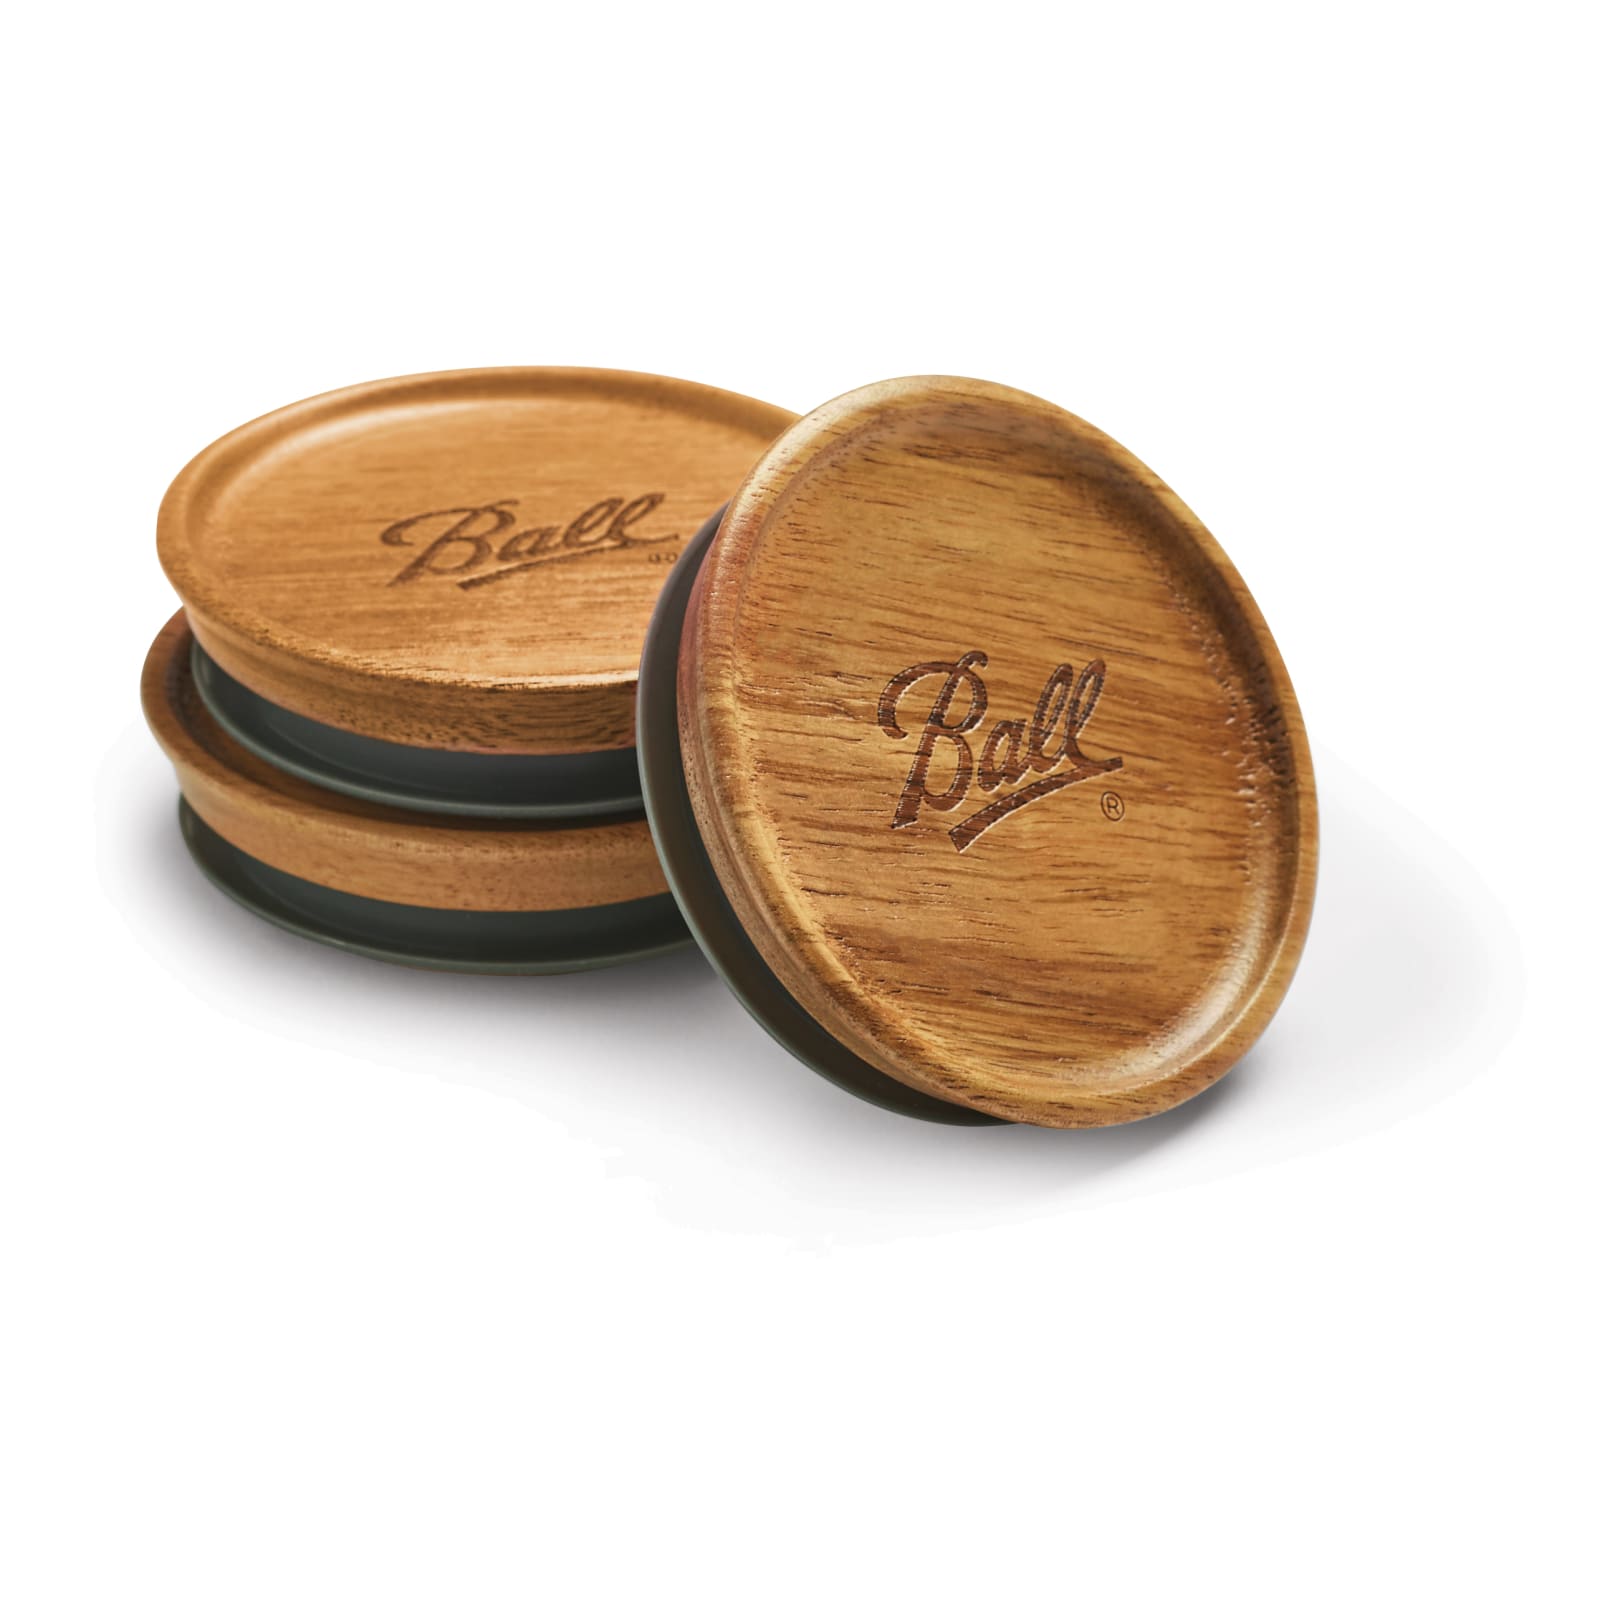 Wooden Mason Jar Lids, Wood Lids For Ball Mason Jars, Stash Jar Covers